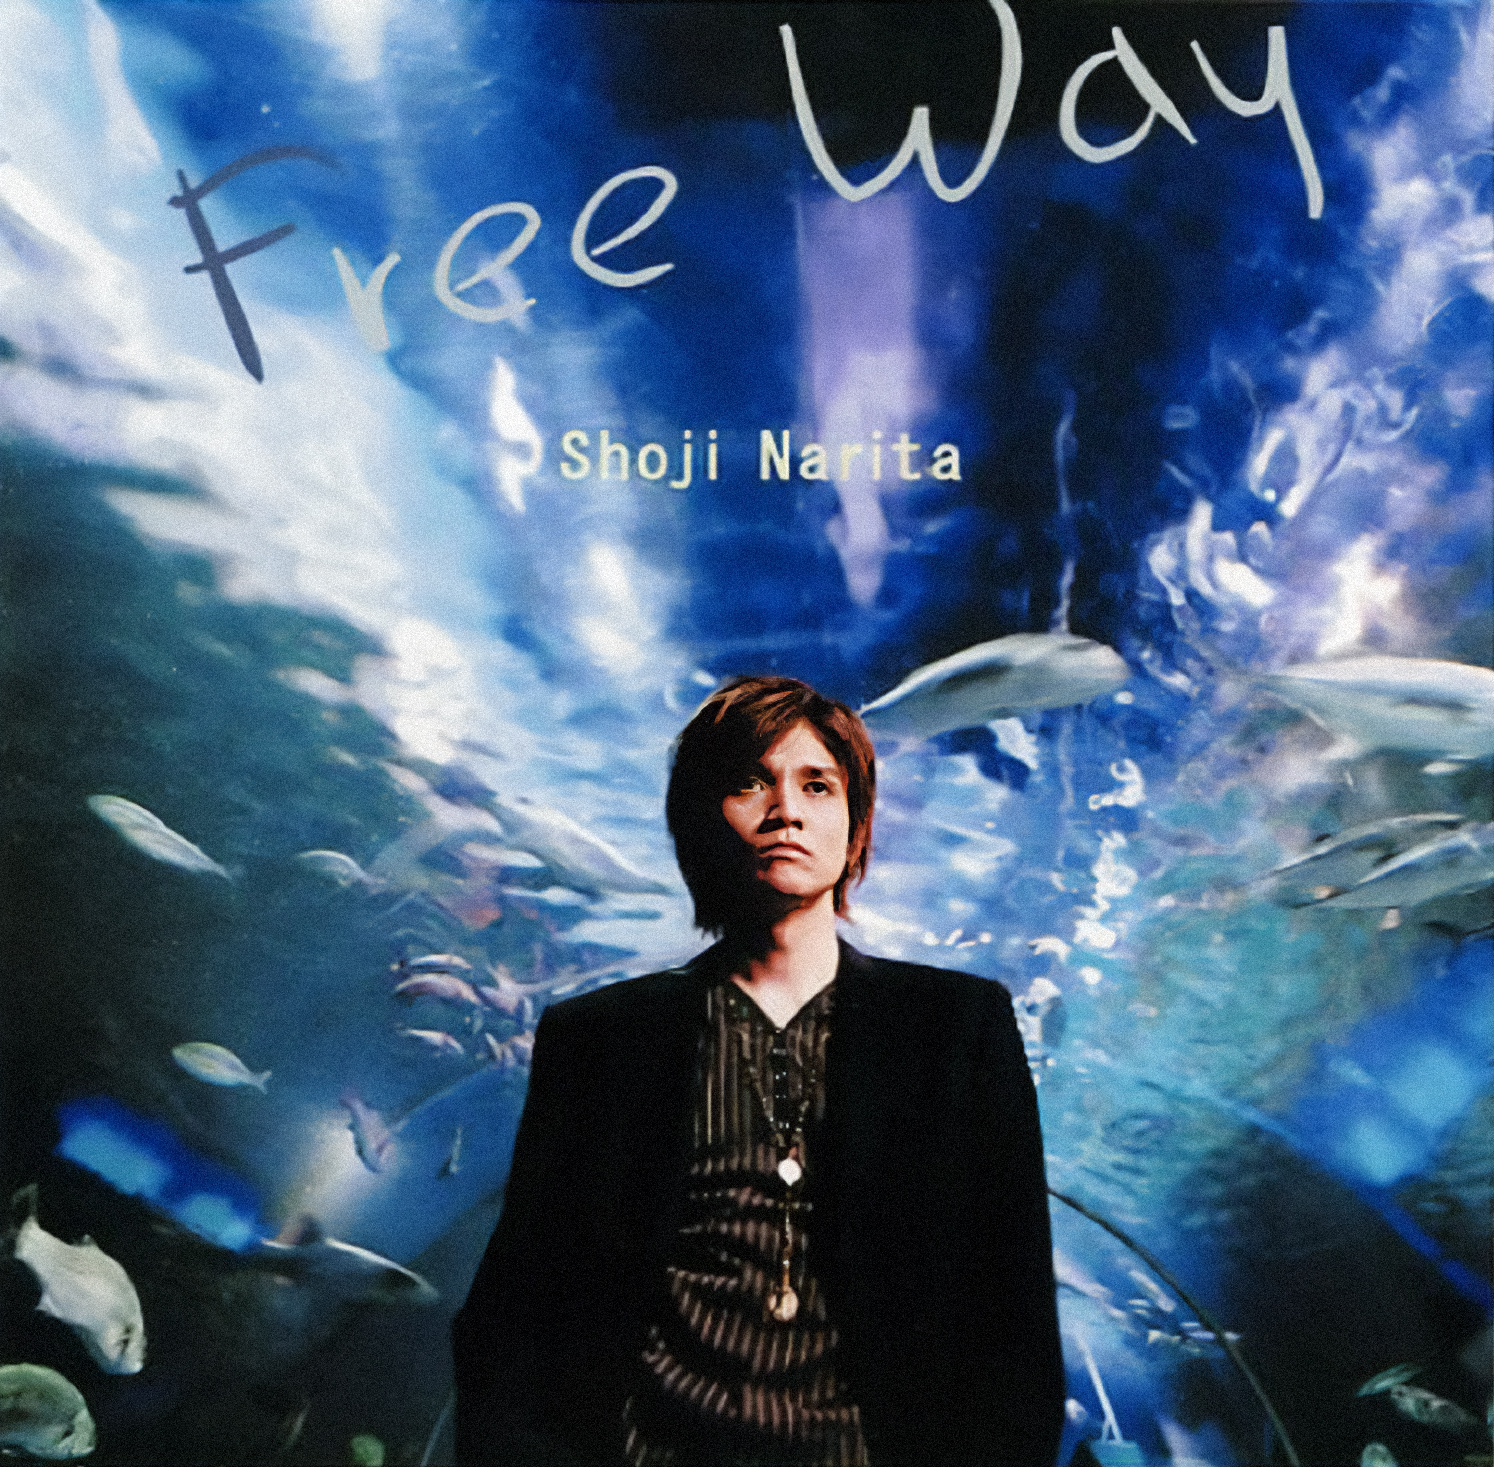 Free way - 成田昭次オフィシャルサイト